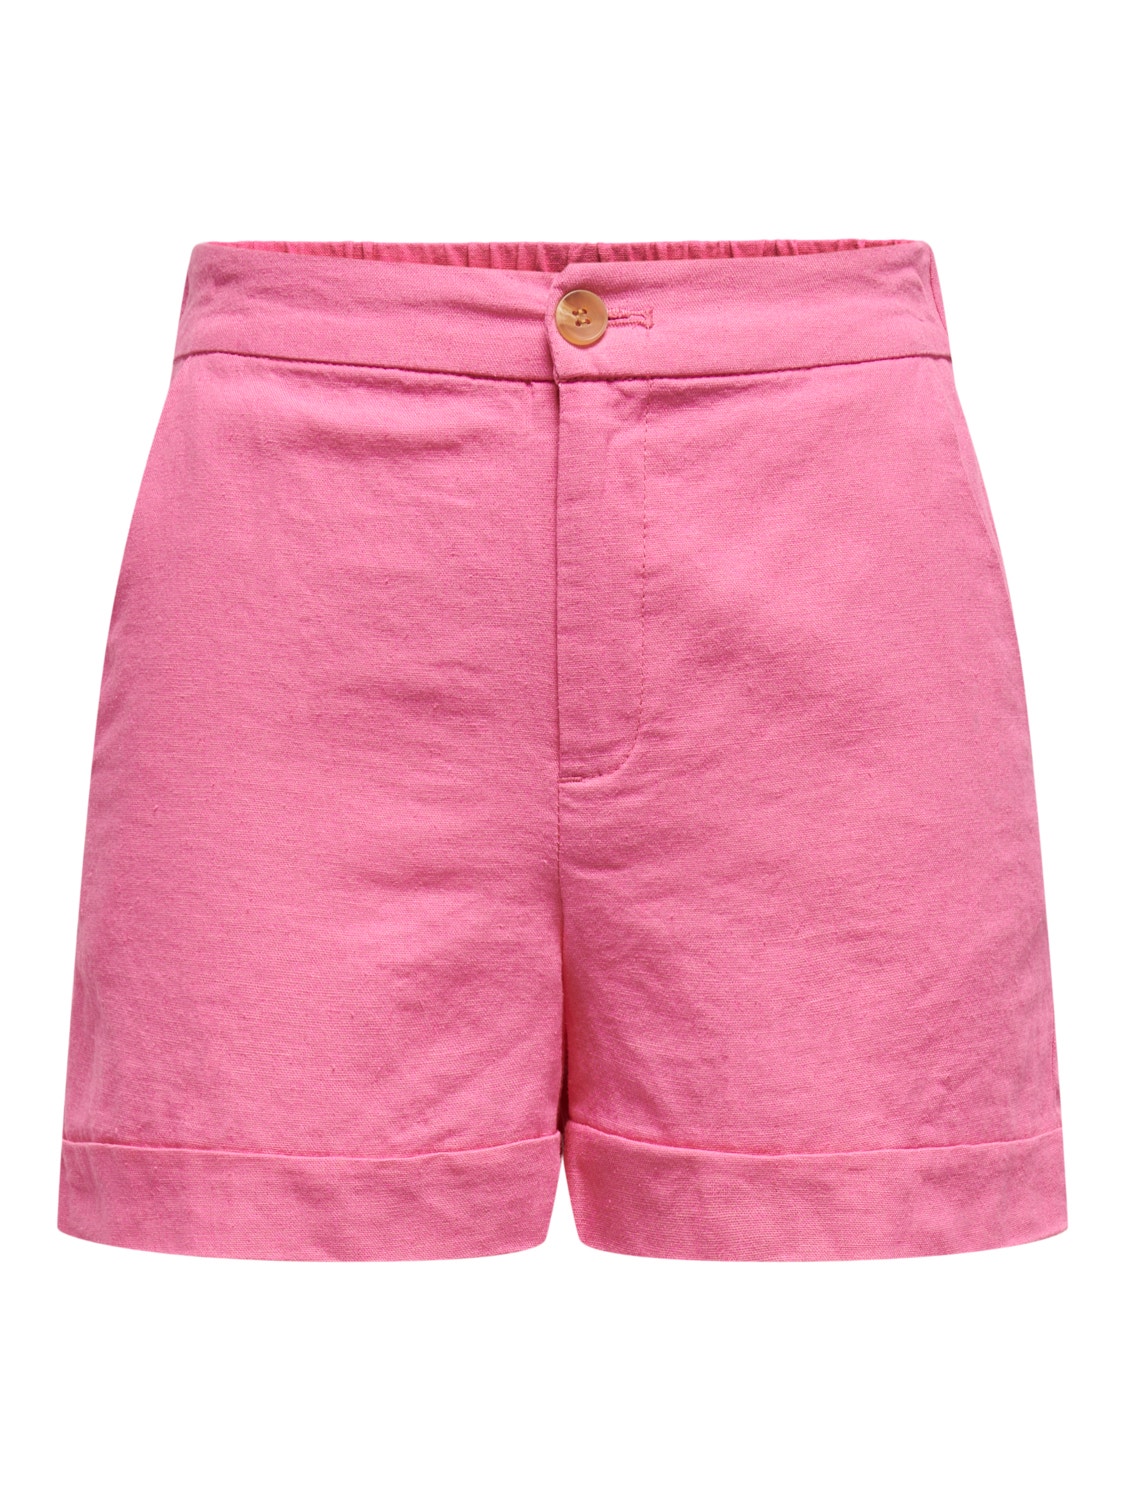 Qoo10 - Kydra Flex Shorts : Women's Clothing